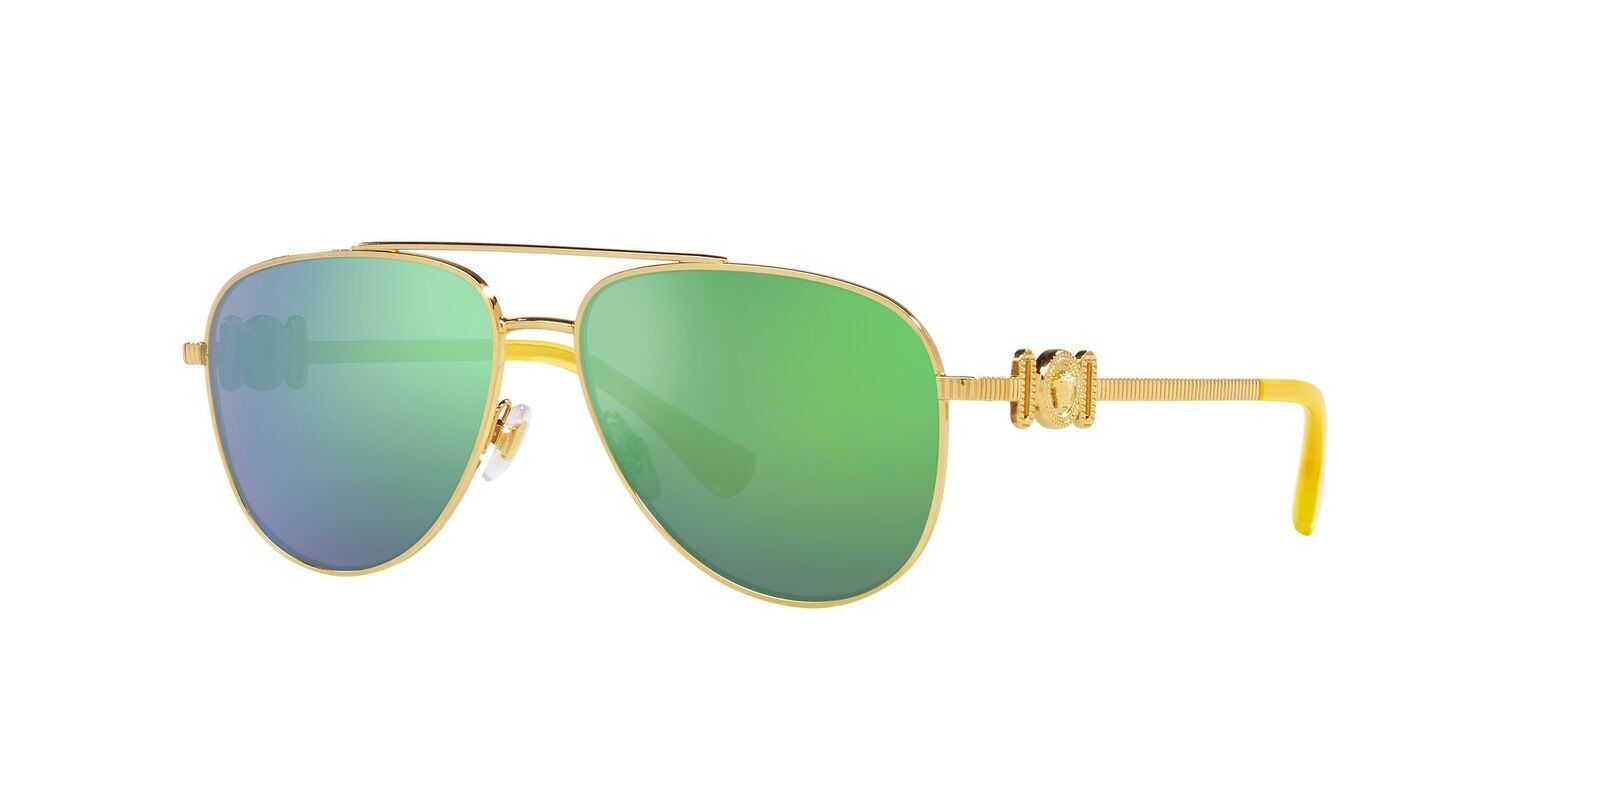 Buy Invu Sunglasses Aviator With Green Lens For Men Online